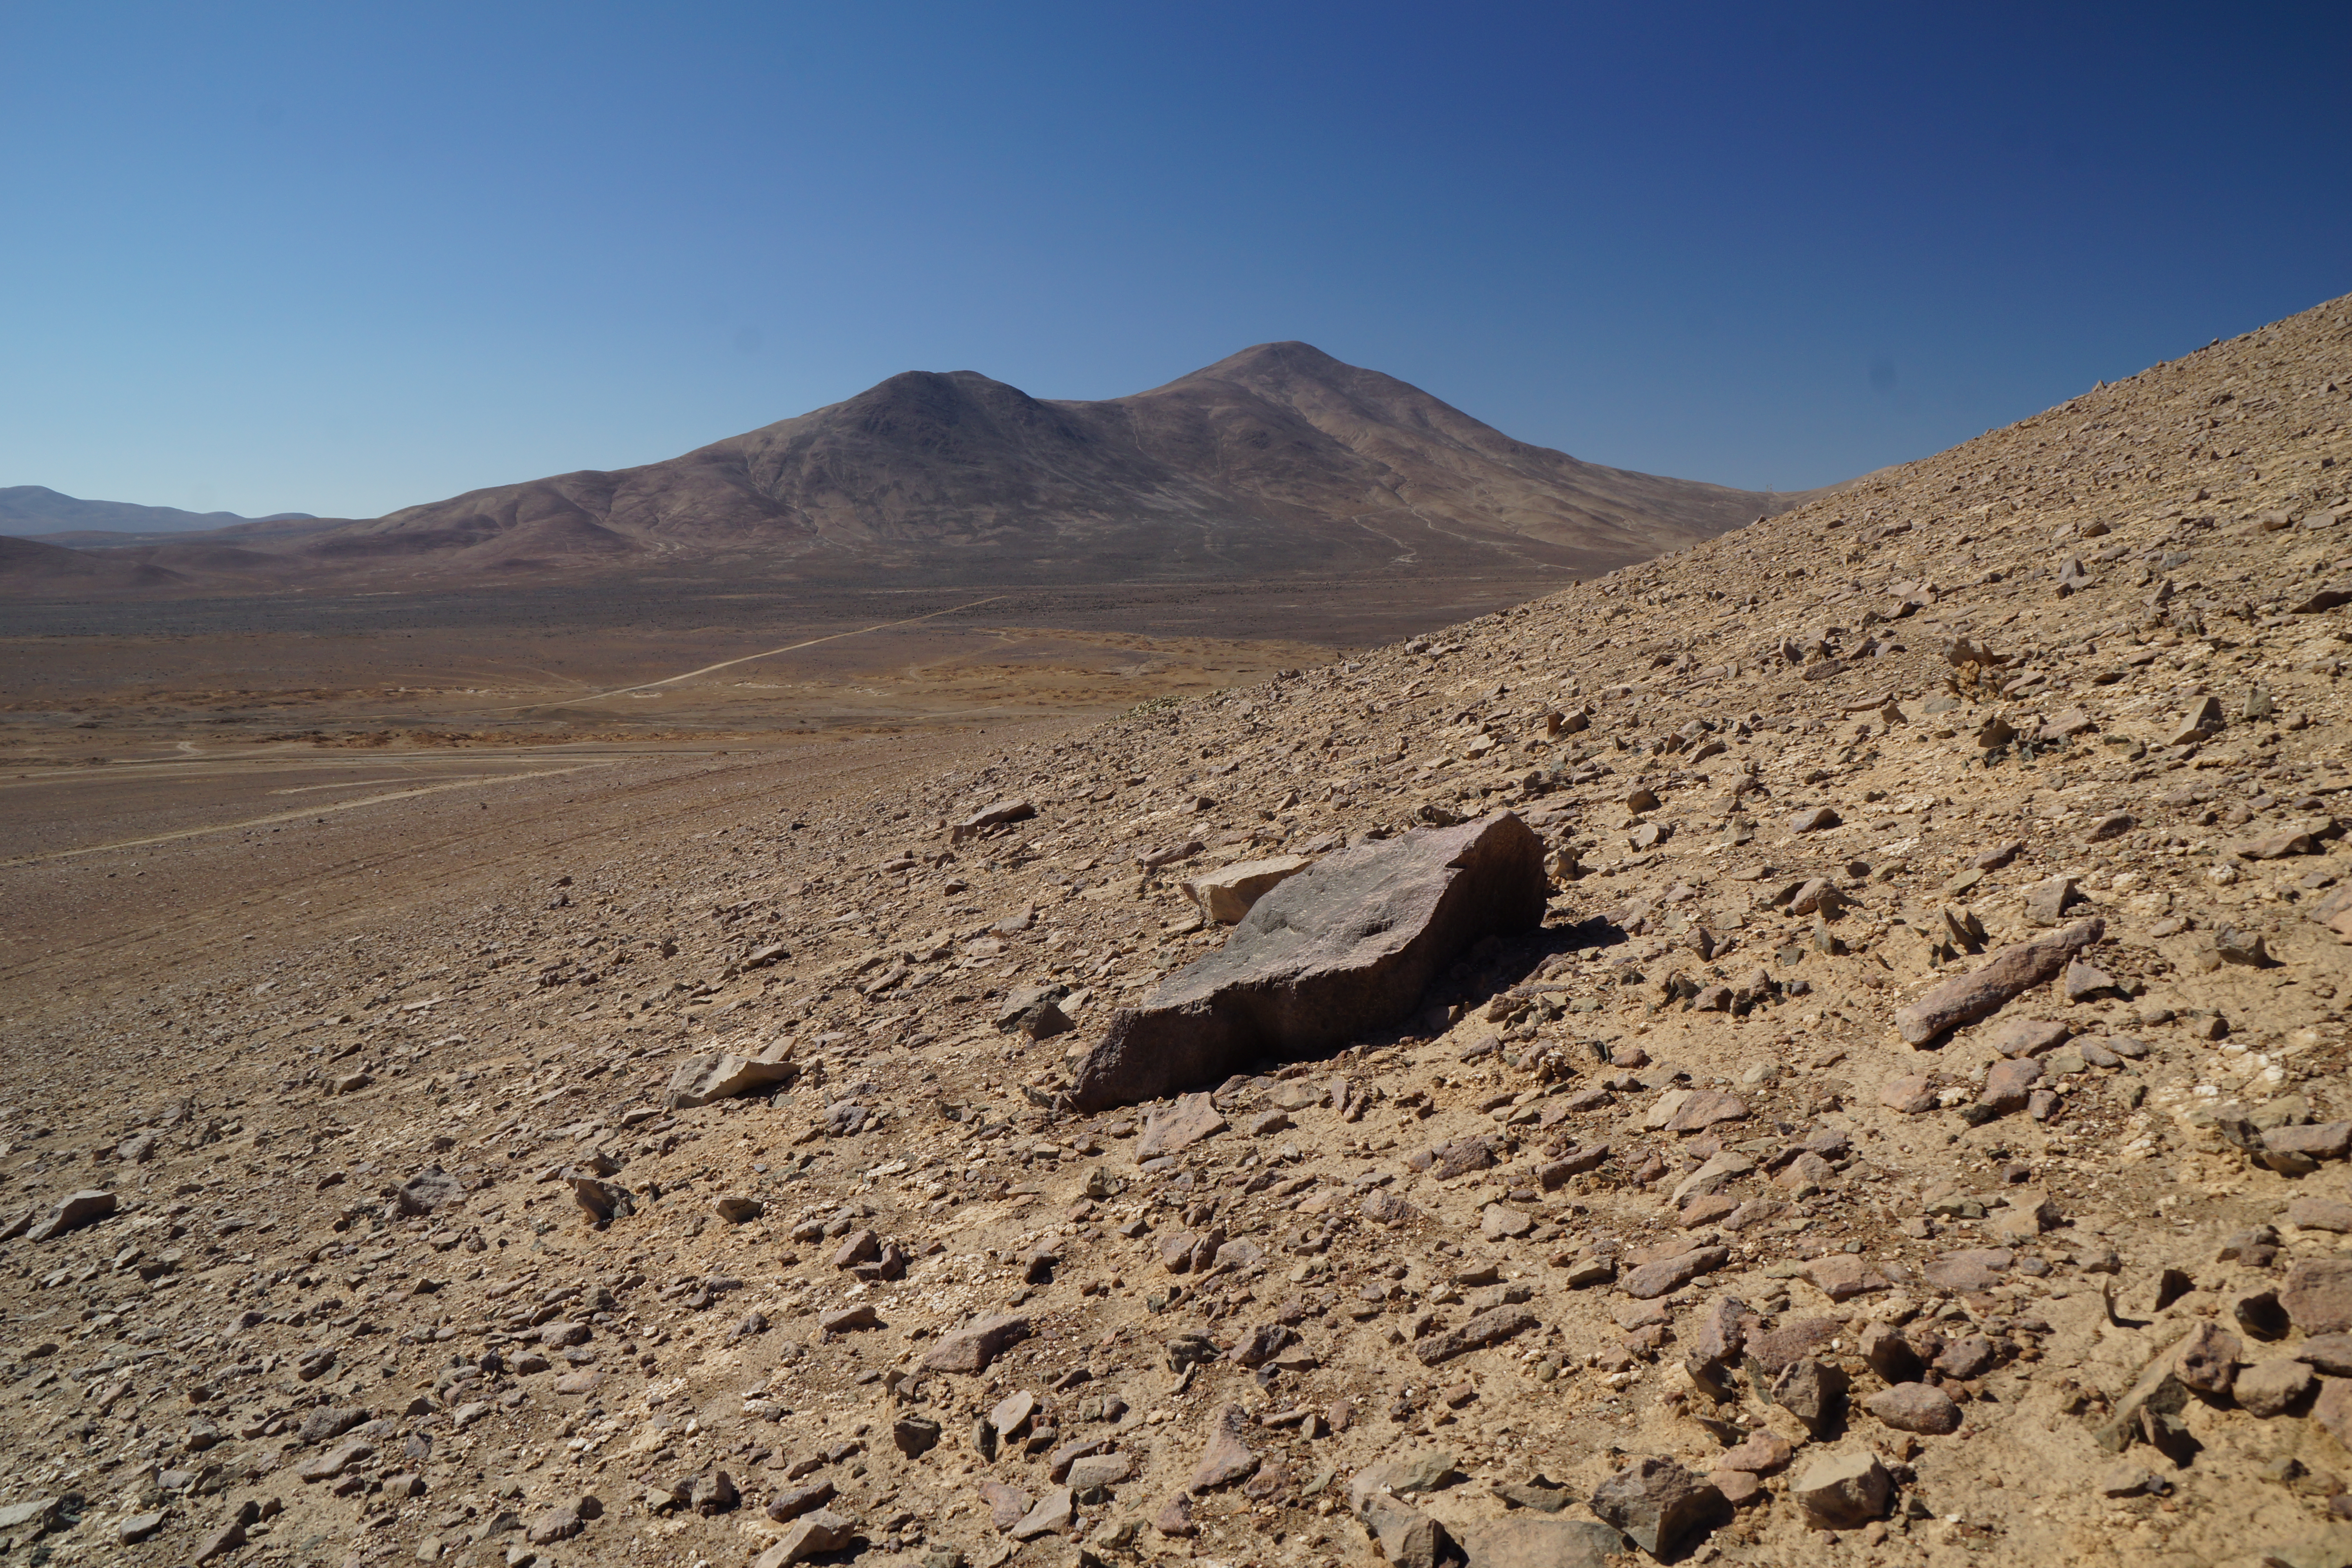 The Atacama desert in Chile